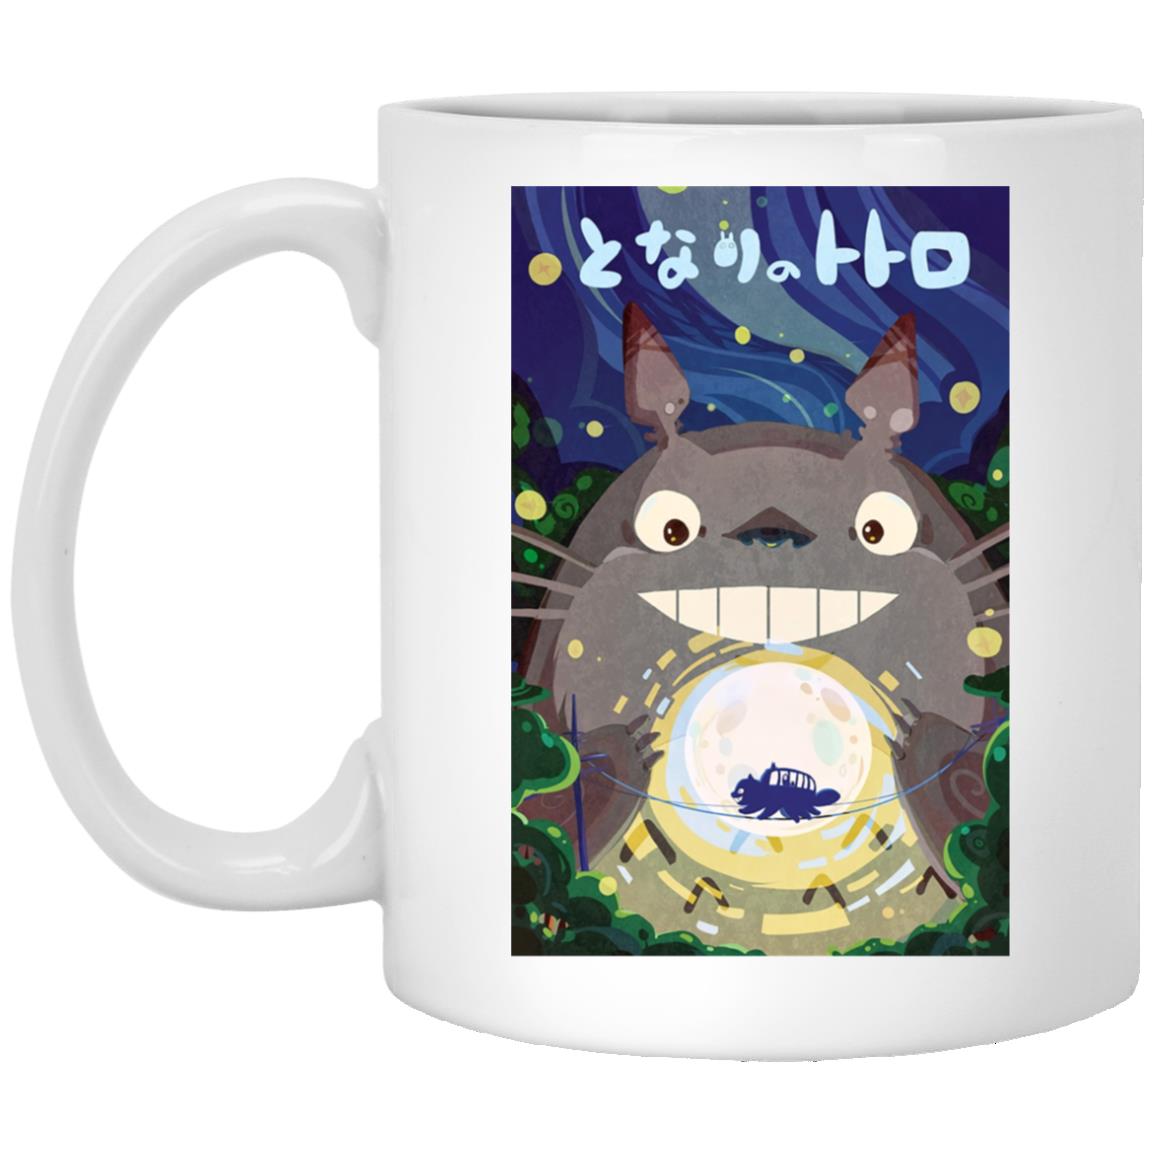 Totoro Holding the Catbus Mug